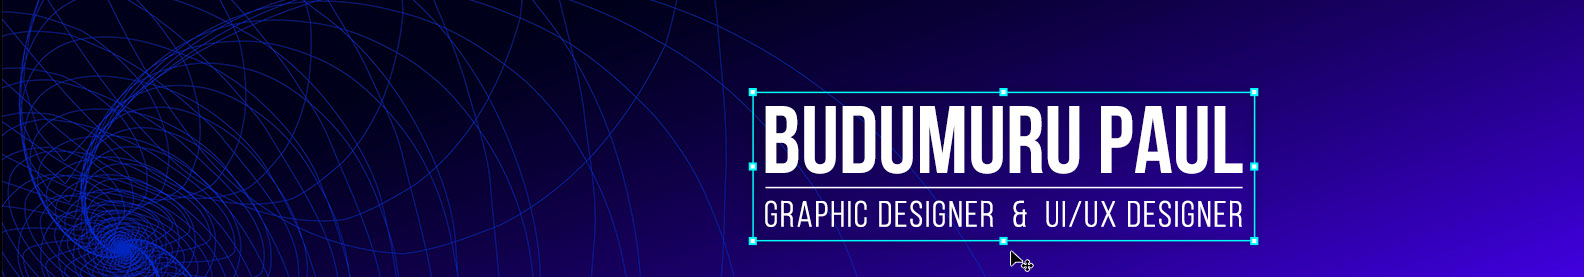 Bannière de profil de Paul Budumuru